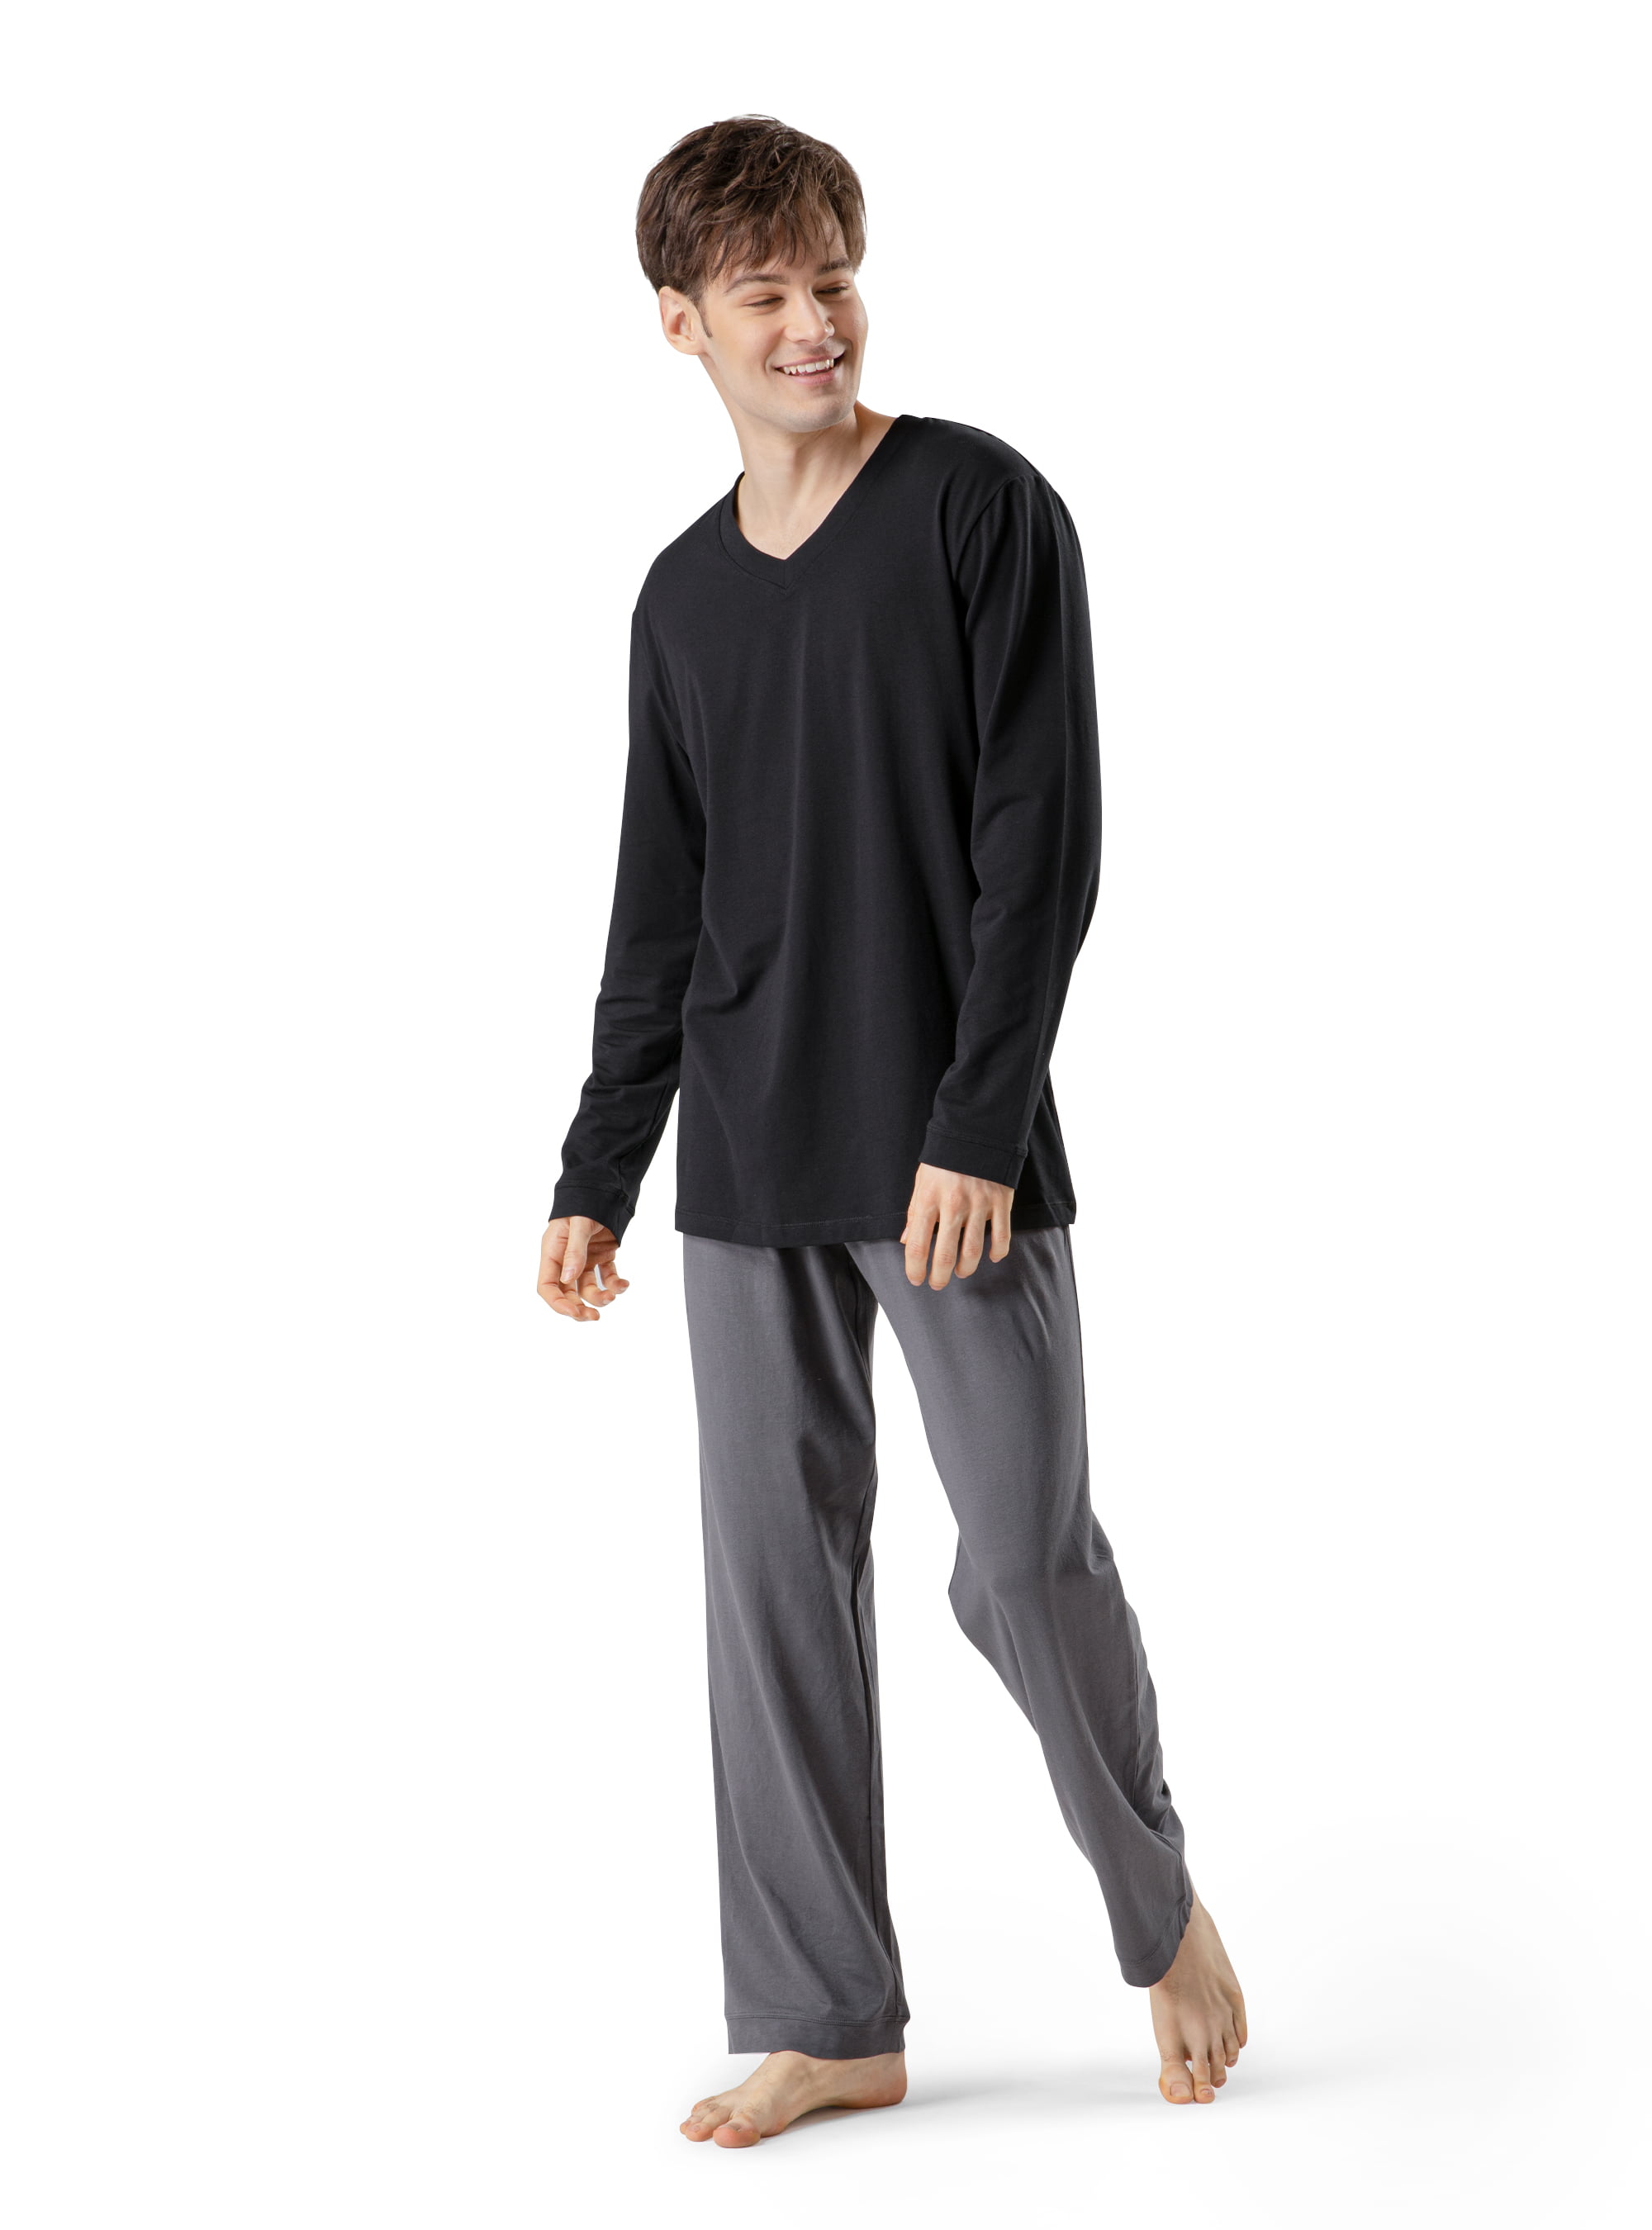 DAVID ARCHY Mens Soft Cotton Pajama Pants Lounge Wear Long PJs Bottoms 1 or 2 Pack